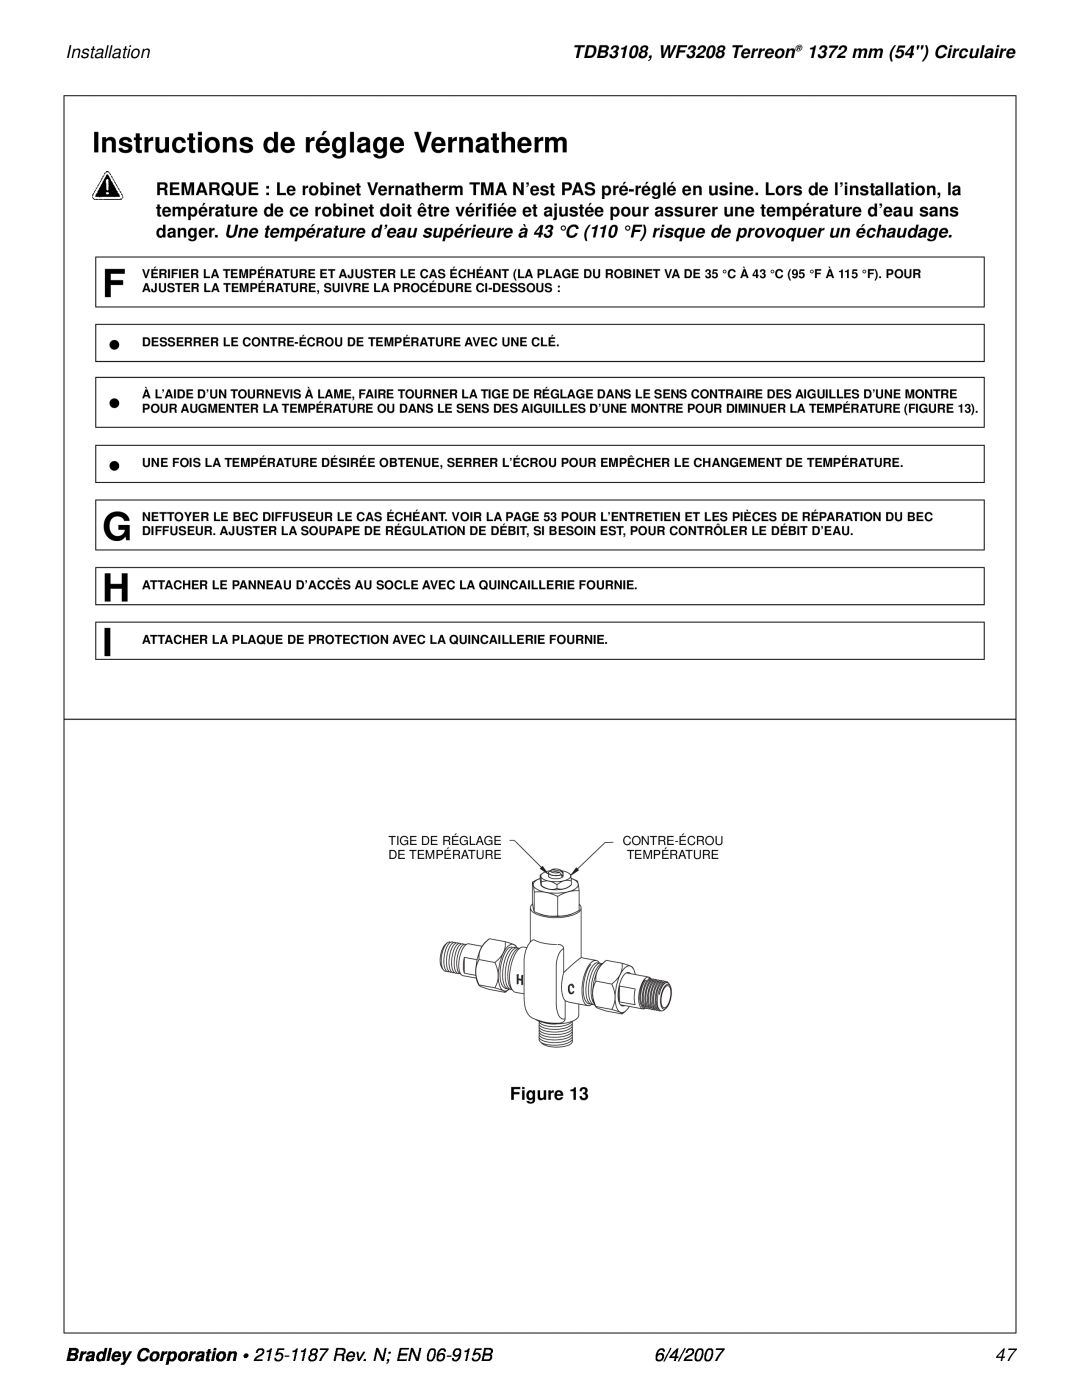 Bradley Smoker Instructions de réglage Vernatherm, Installation, TDB3108, WF3208 Terreon 1372 mm 54 Circulaire 